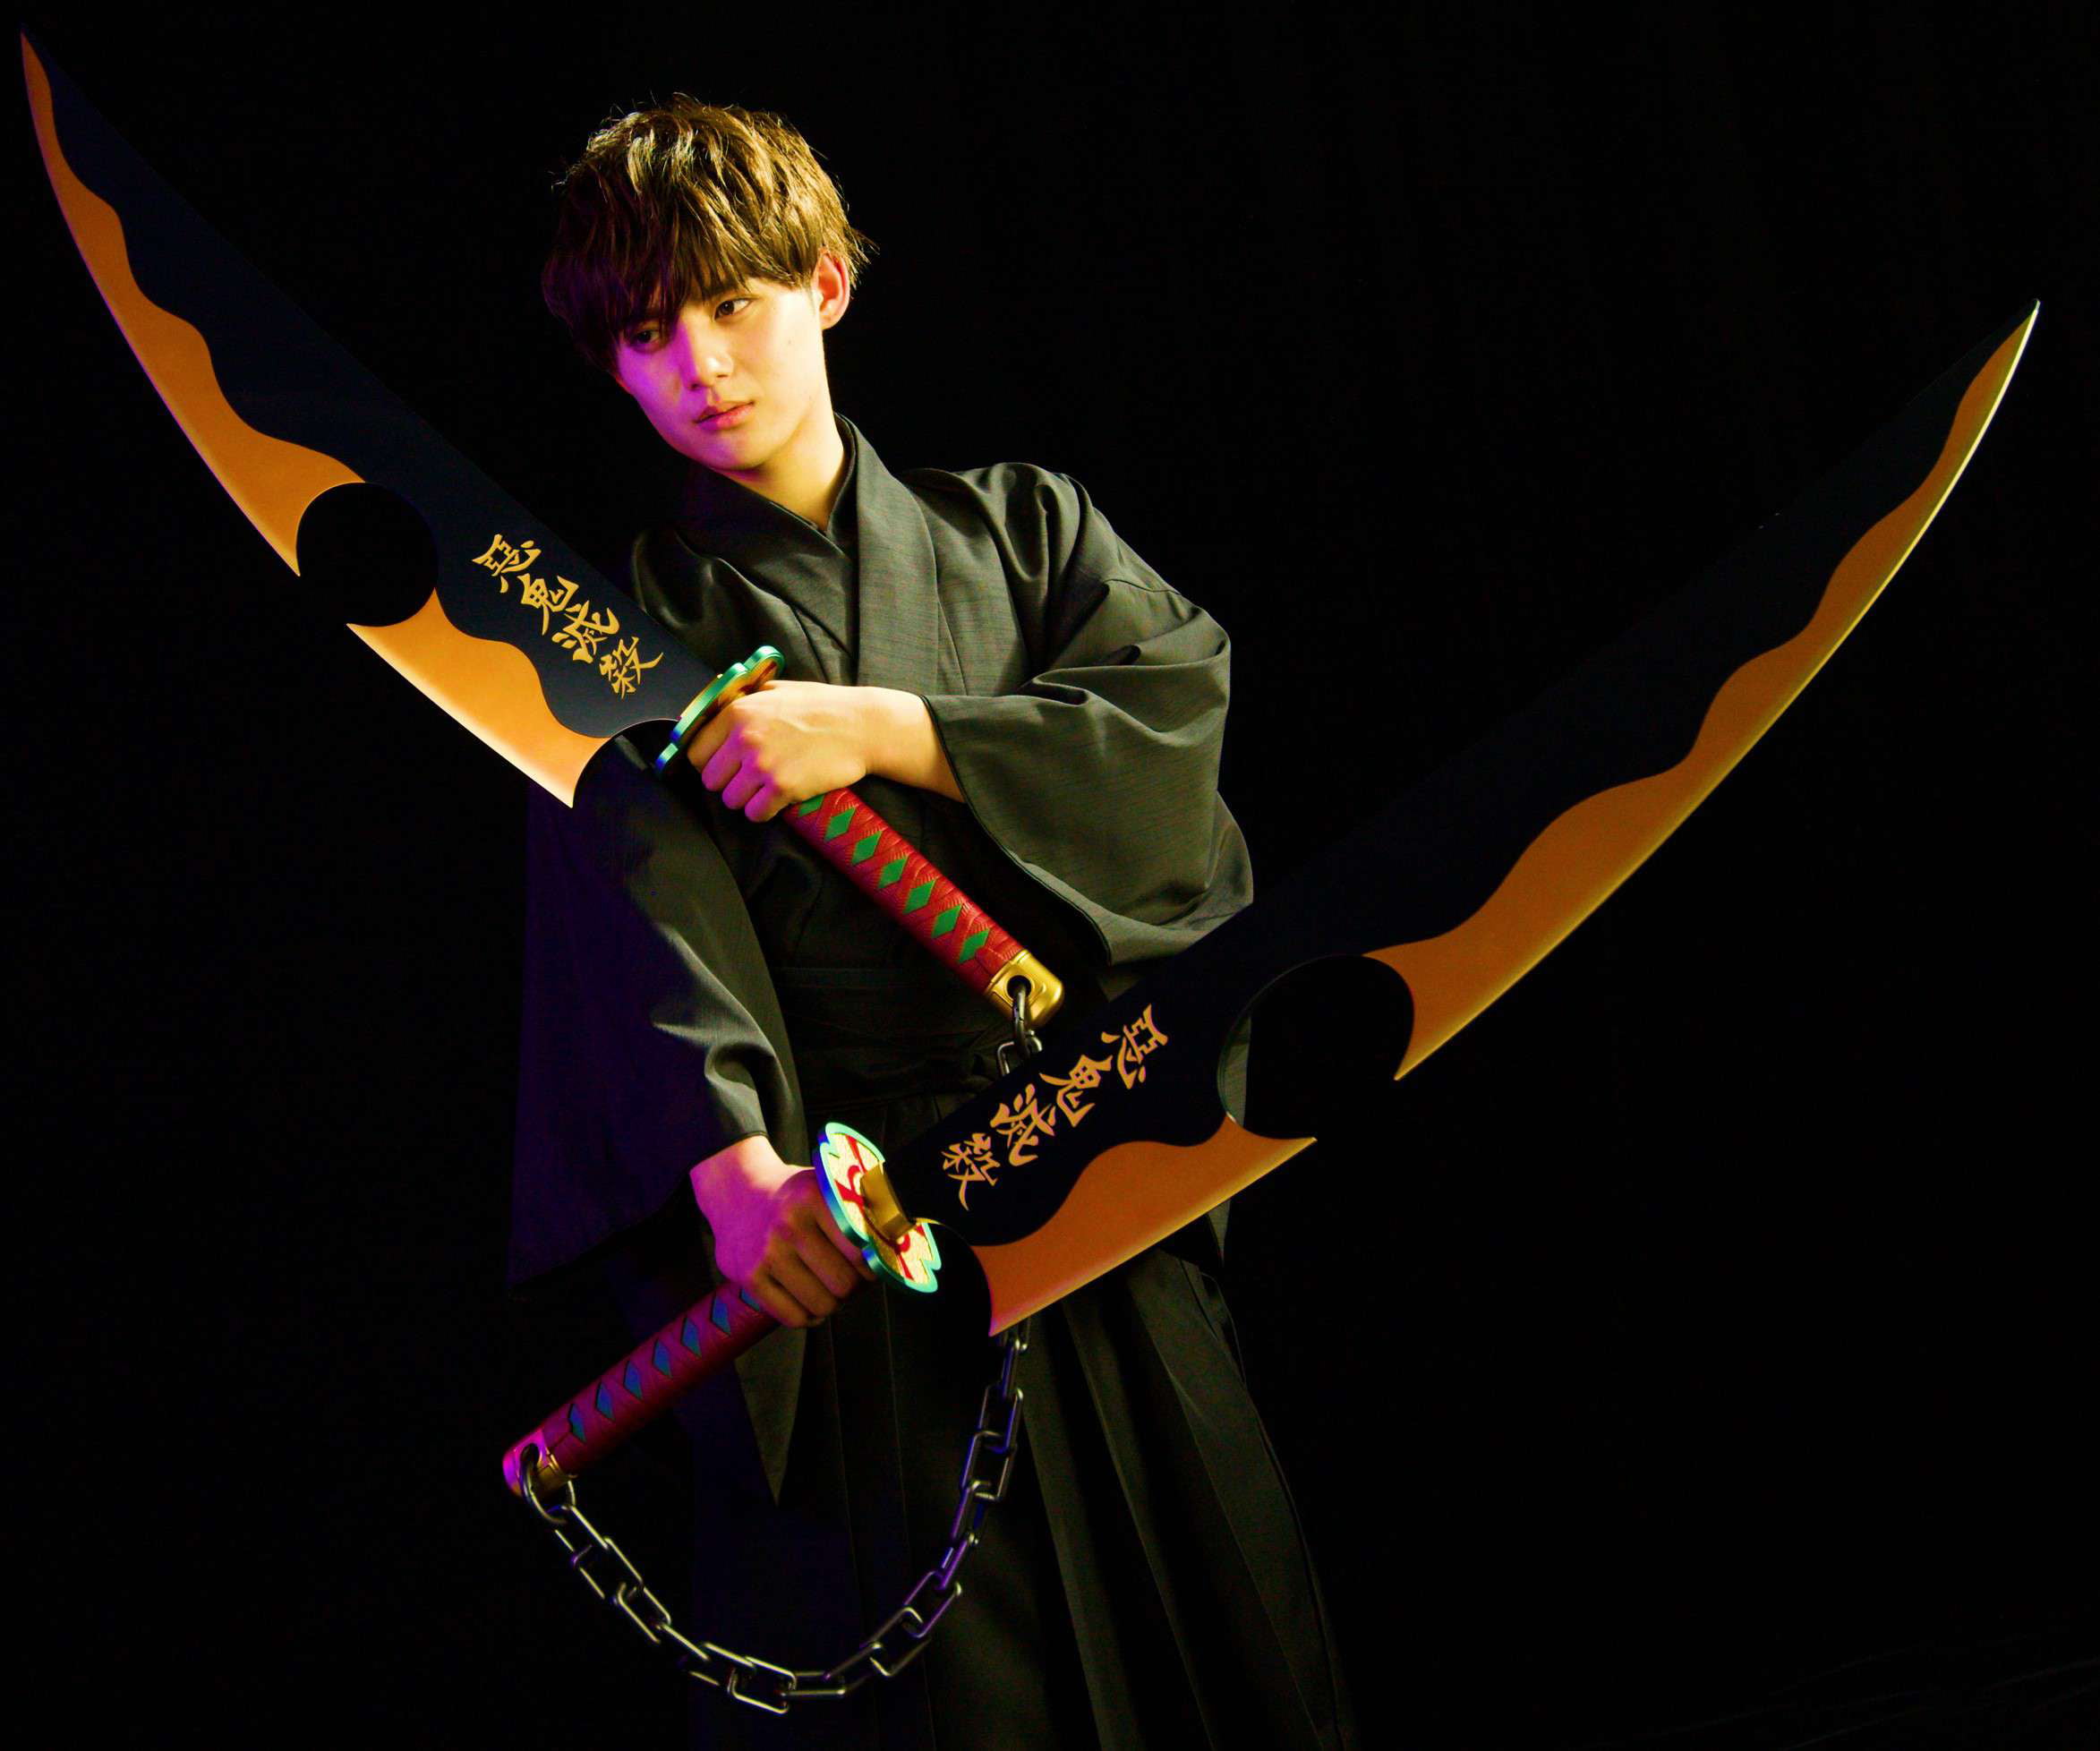 Demon Slayer: Kimetsu no Yaiba Proplica Replicas 1/1 ABS Plastic Nichirin  Swords (Tengen Uzui) 110 cm